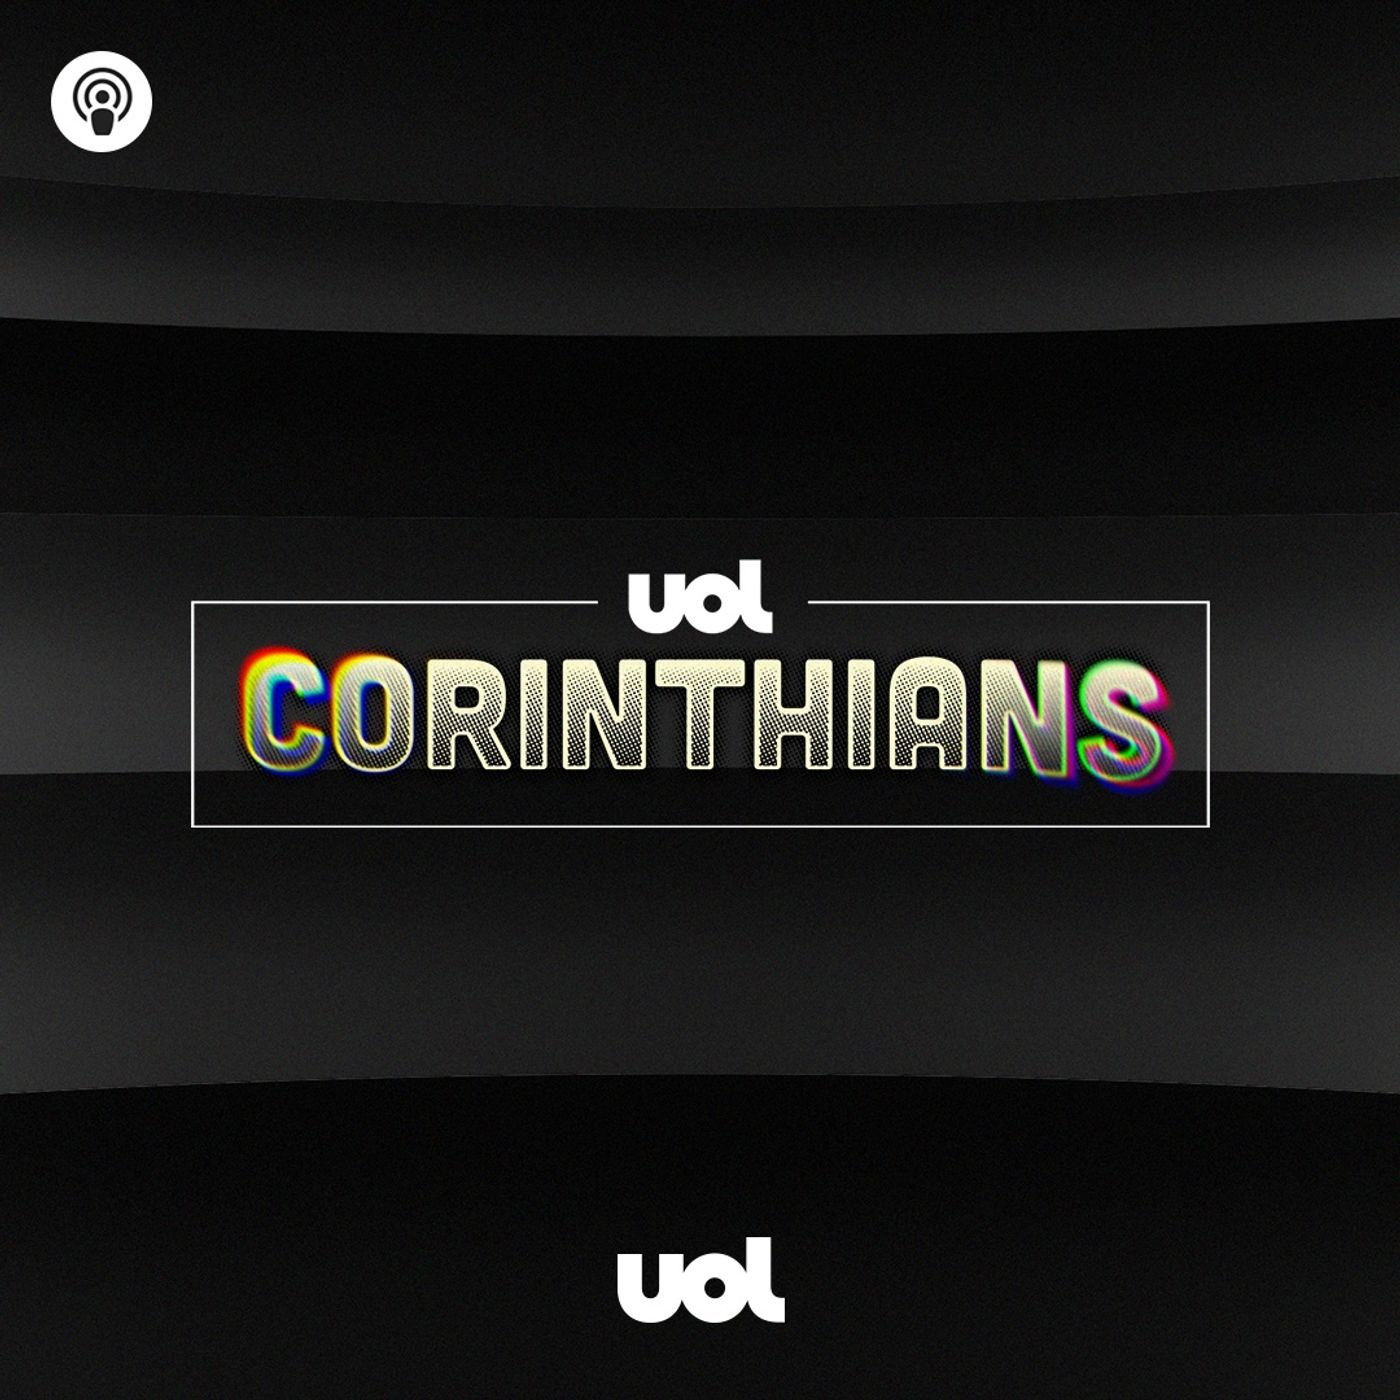 # 2: Corinthians relaxou contra covid-19?